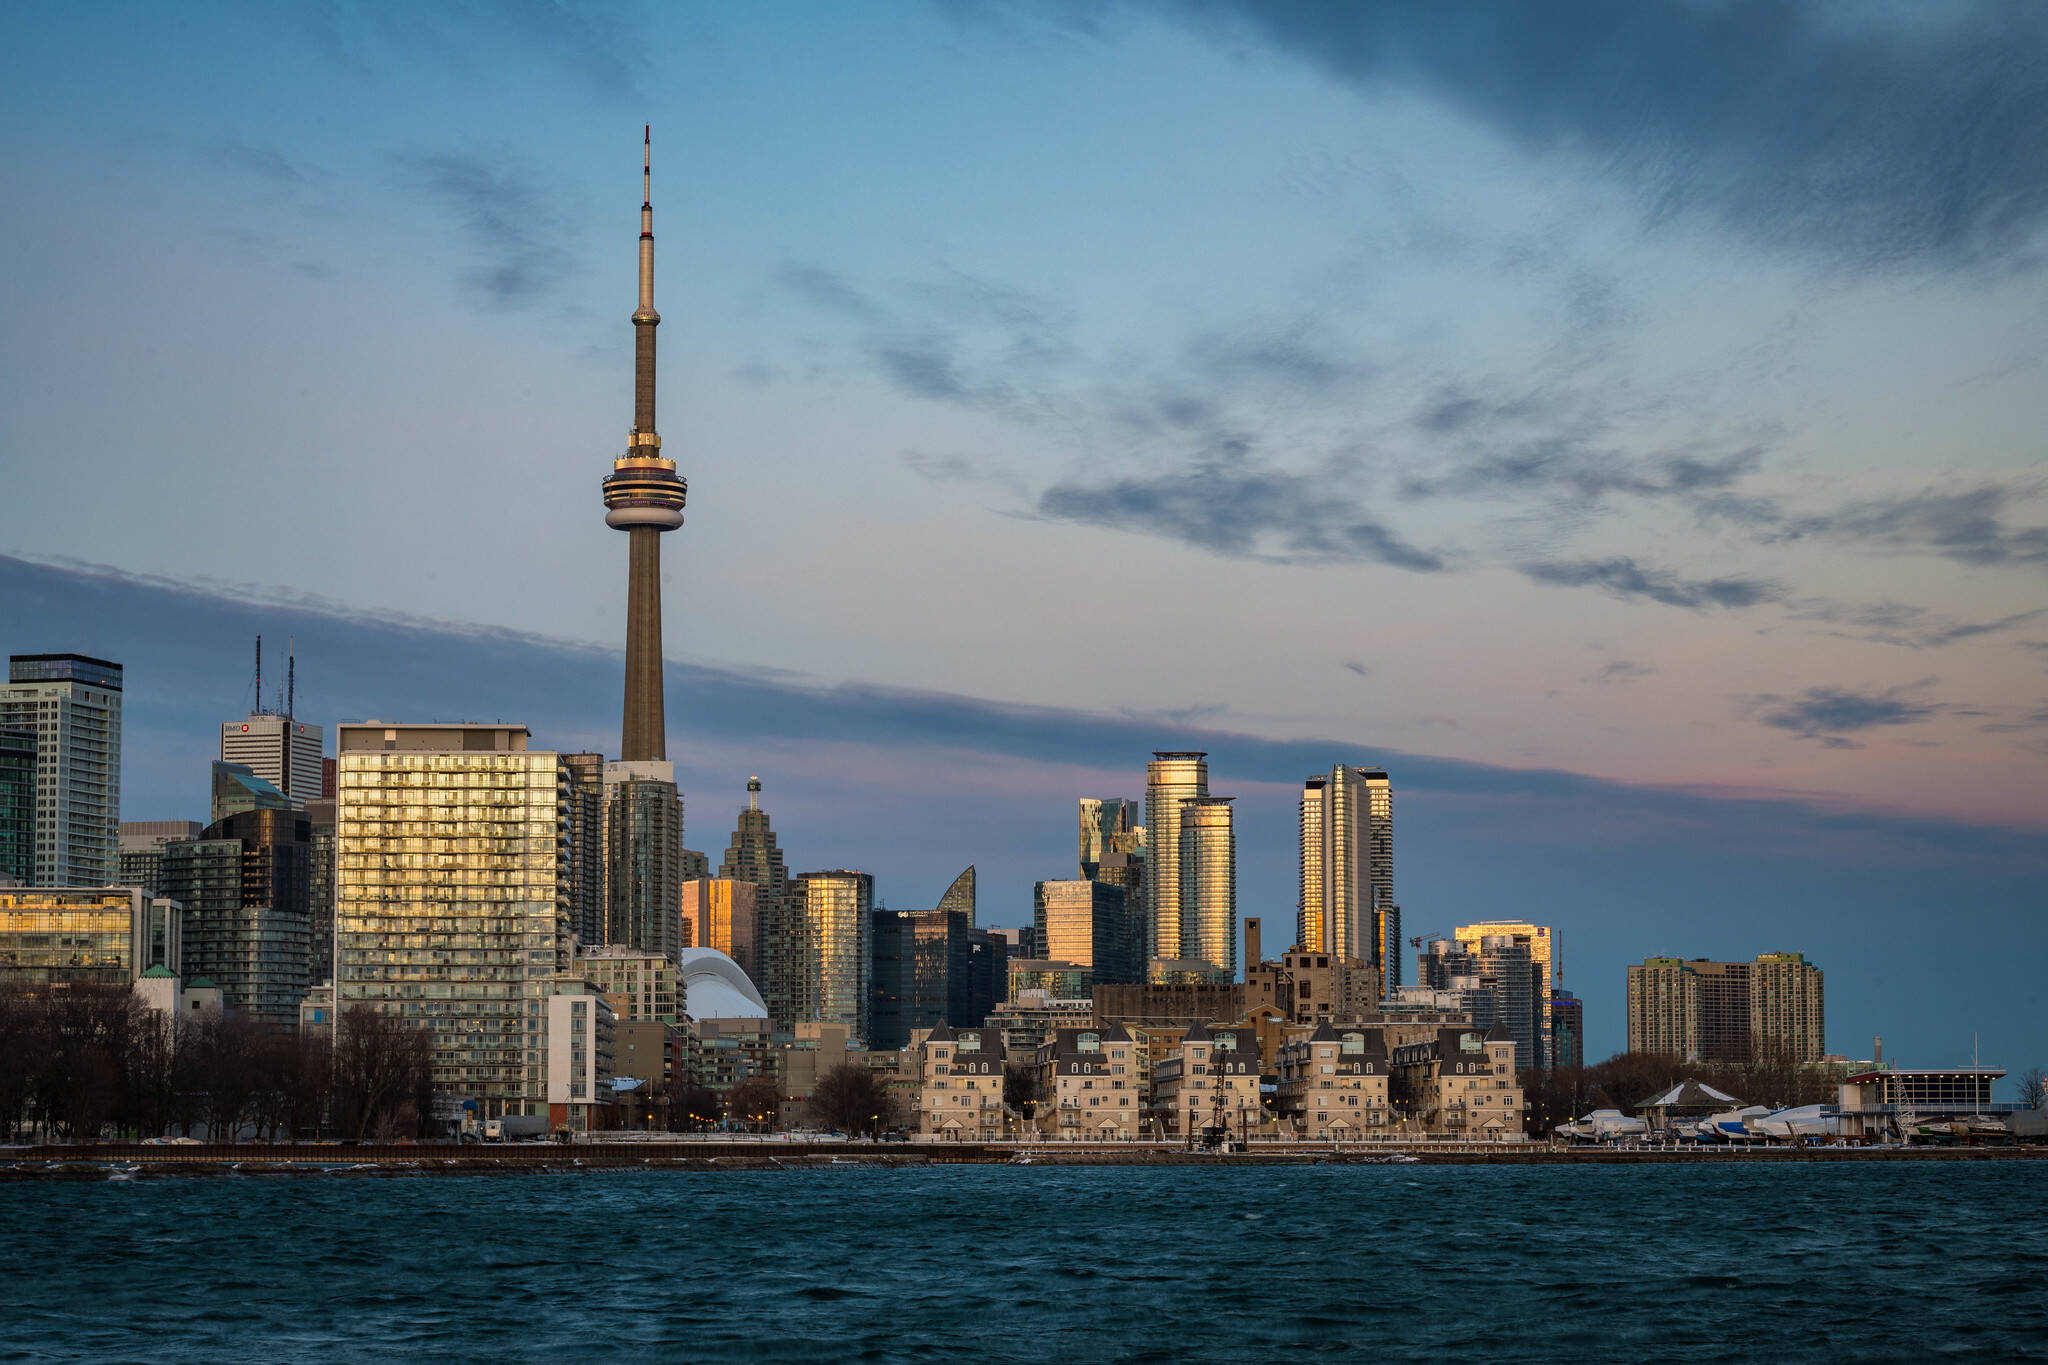 Toronto is still North America's 4th largest city despite what Google says